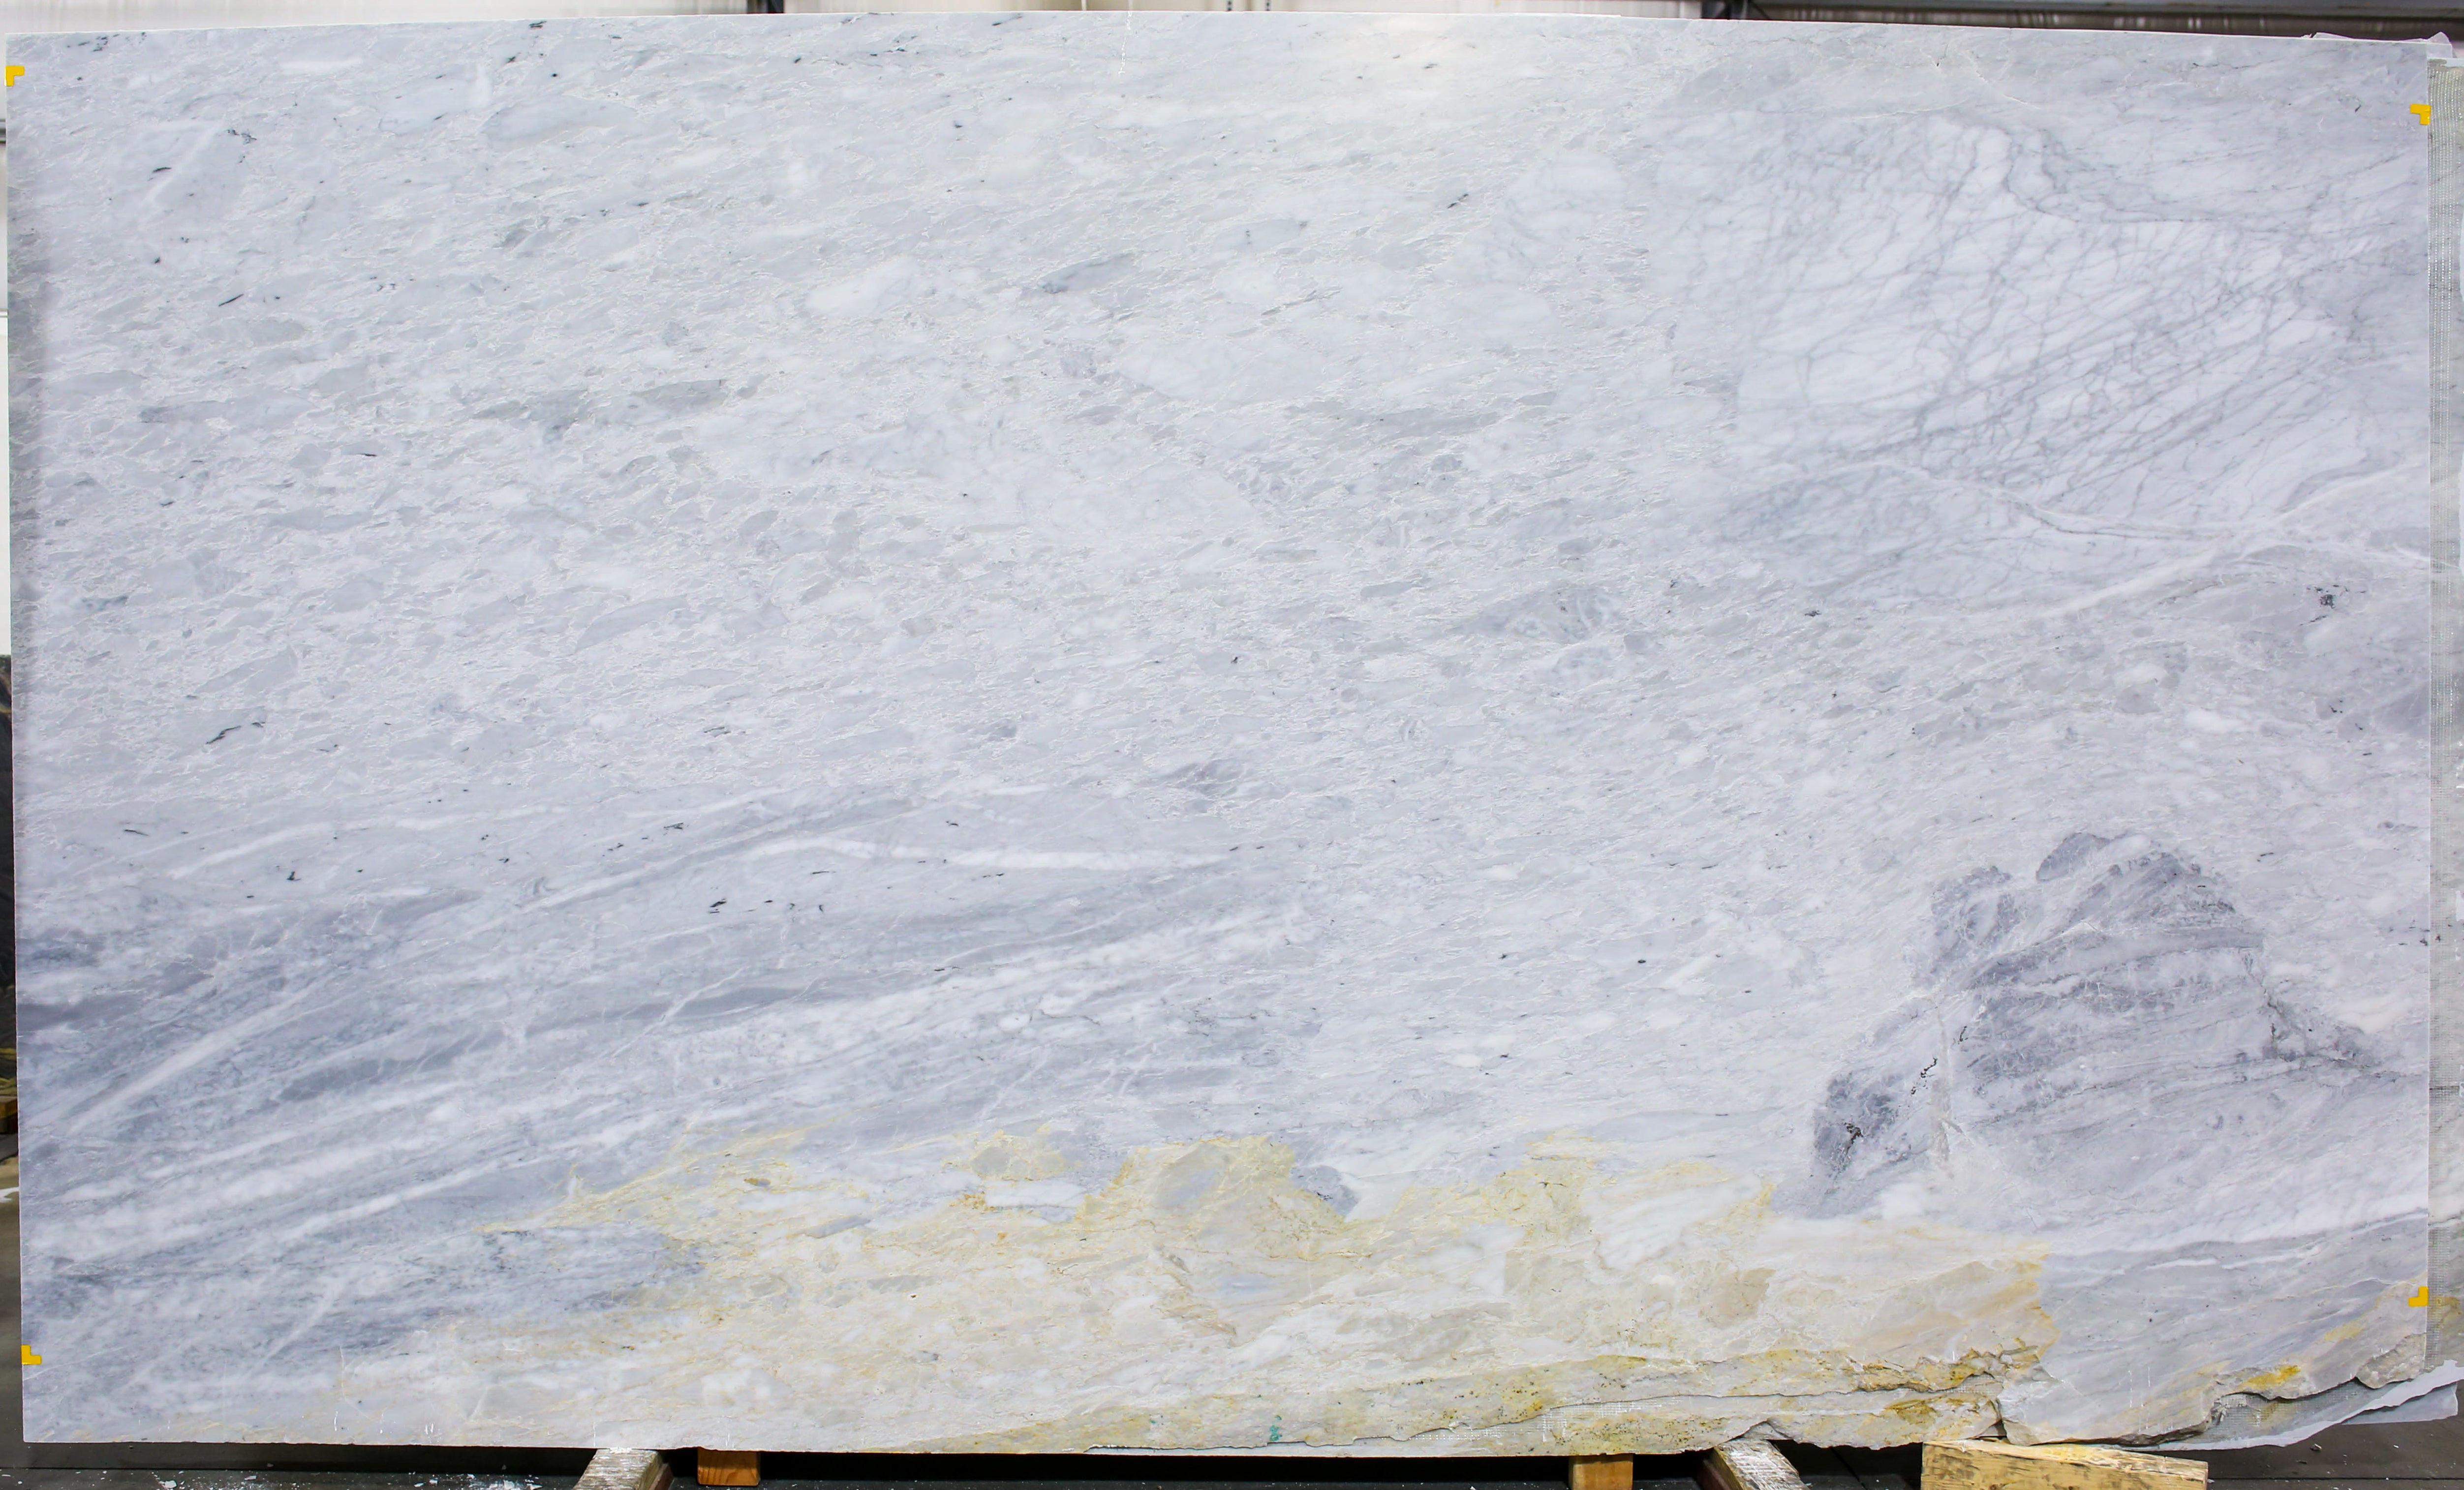  Grigio Toscana Marble Slab 3/4 - 23604#44 -  68X135 